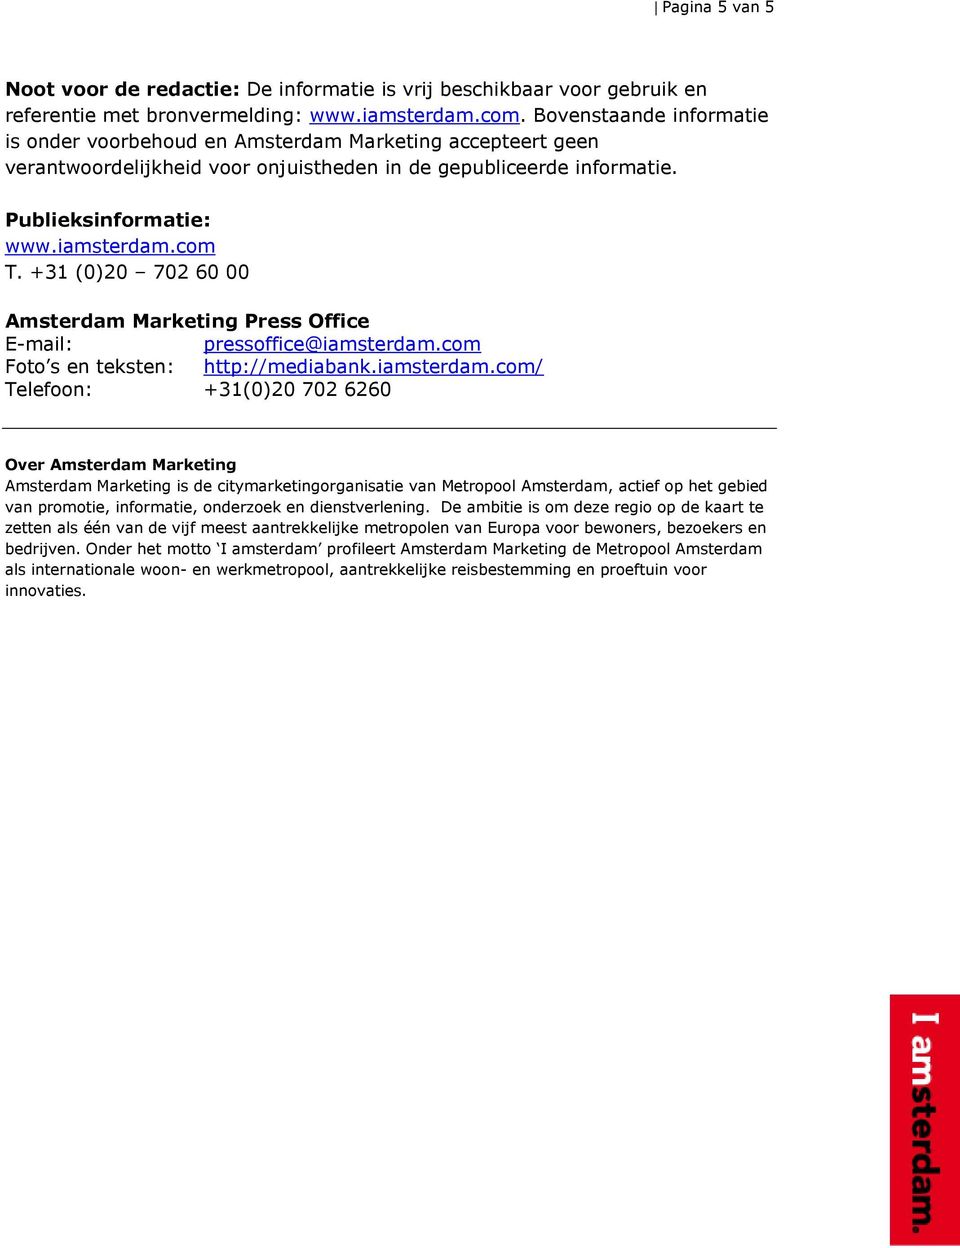 +31 (0)20 702 60 00 Amsterdam Marketing Press Office E-mail: pressoffice@iamsterdam.